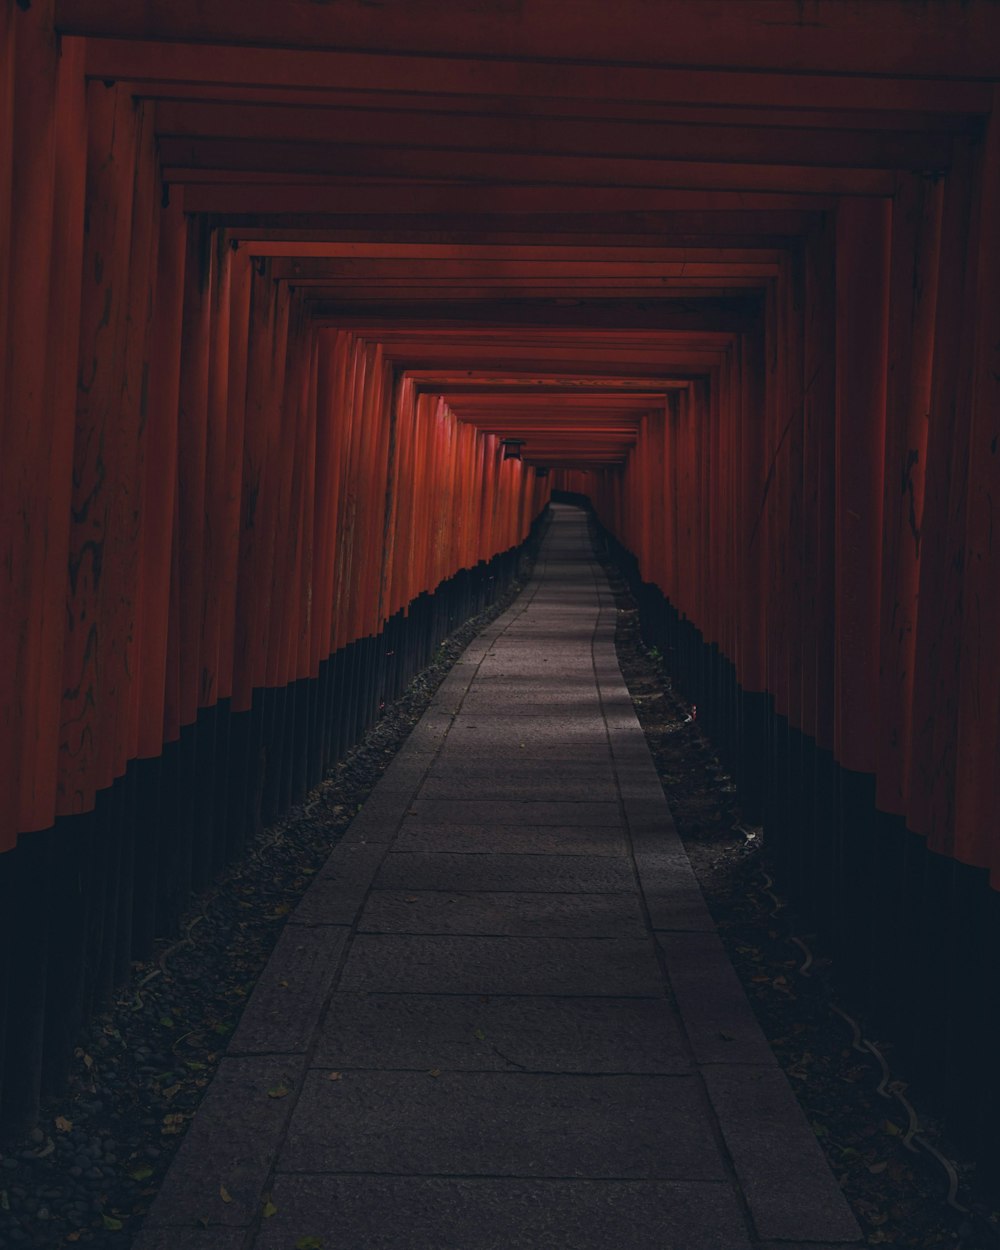 a long wooden walkway